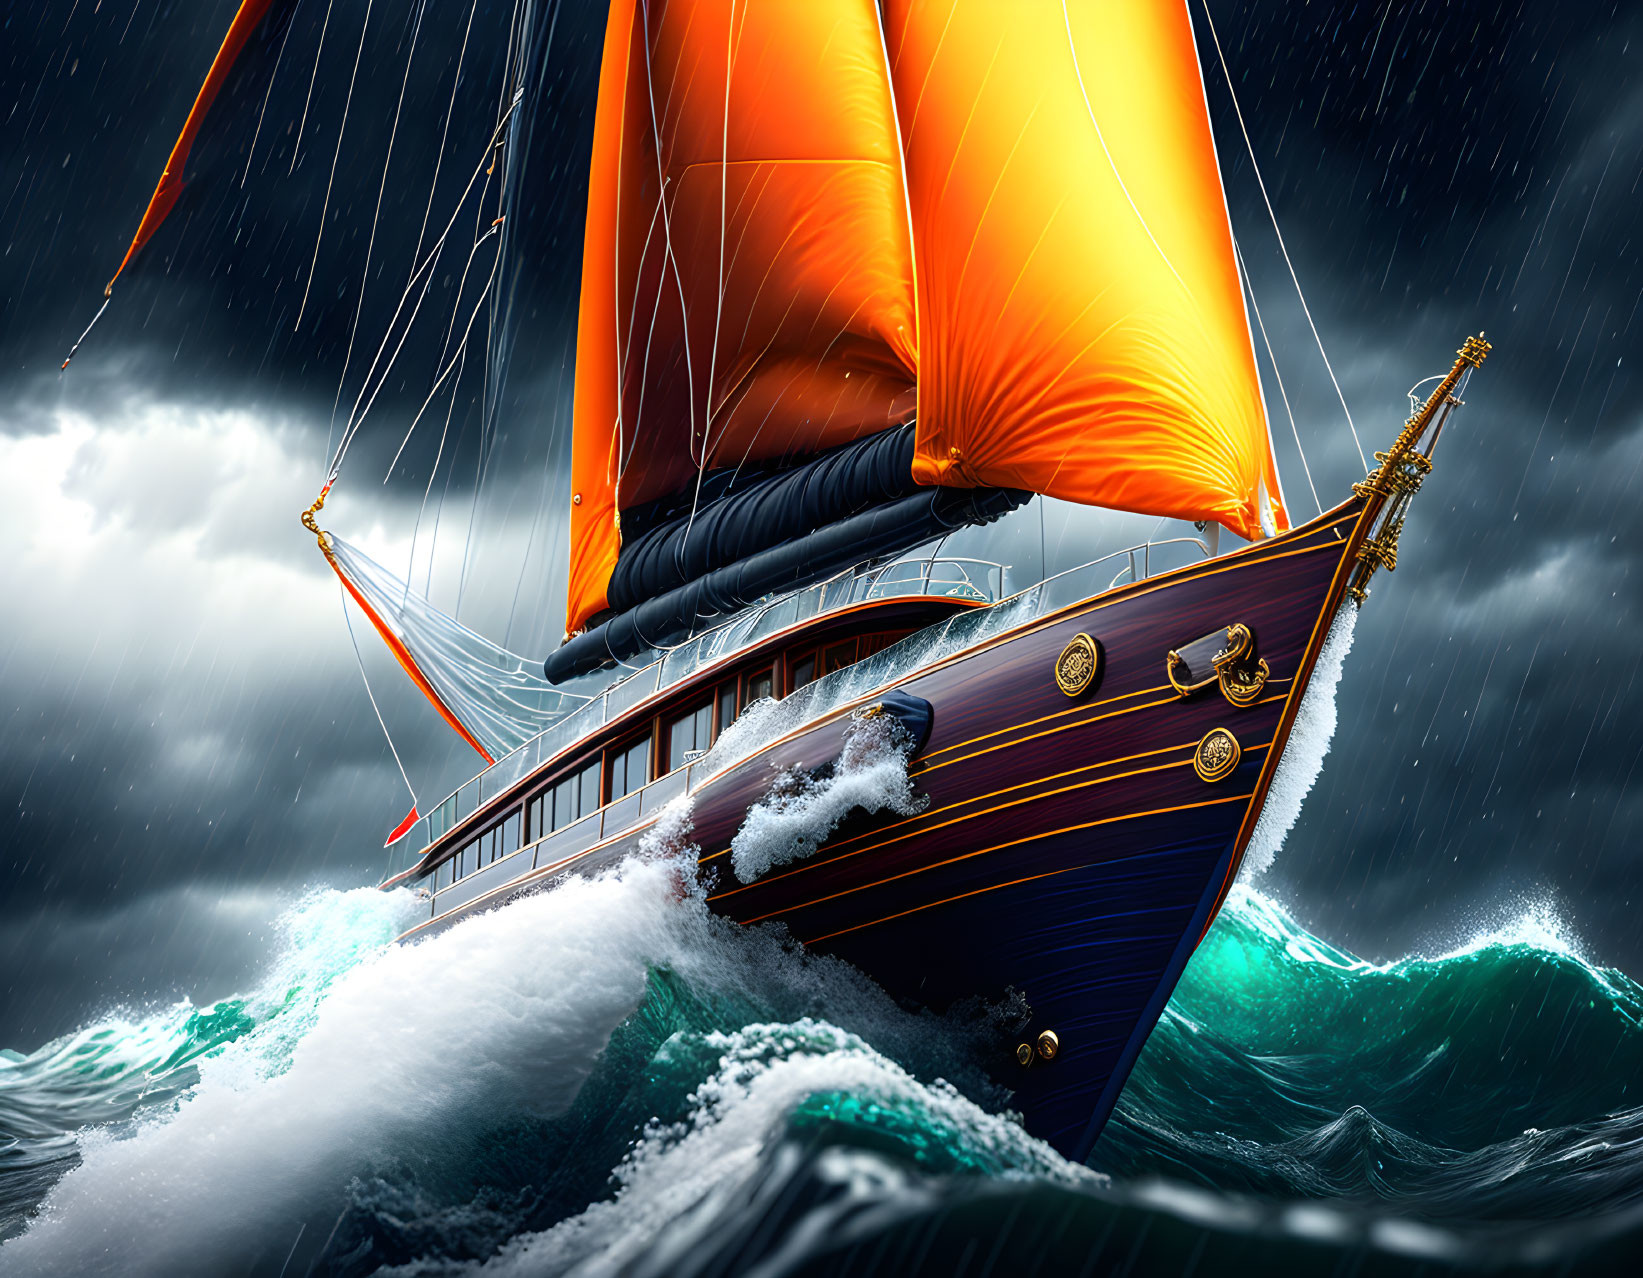 Orange sailboat navigating stormy seas under dark sky